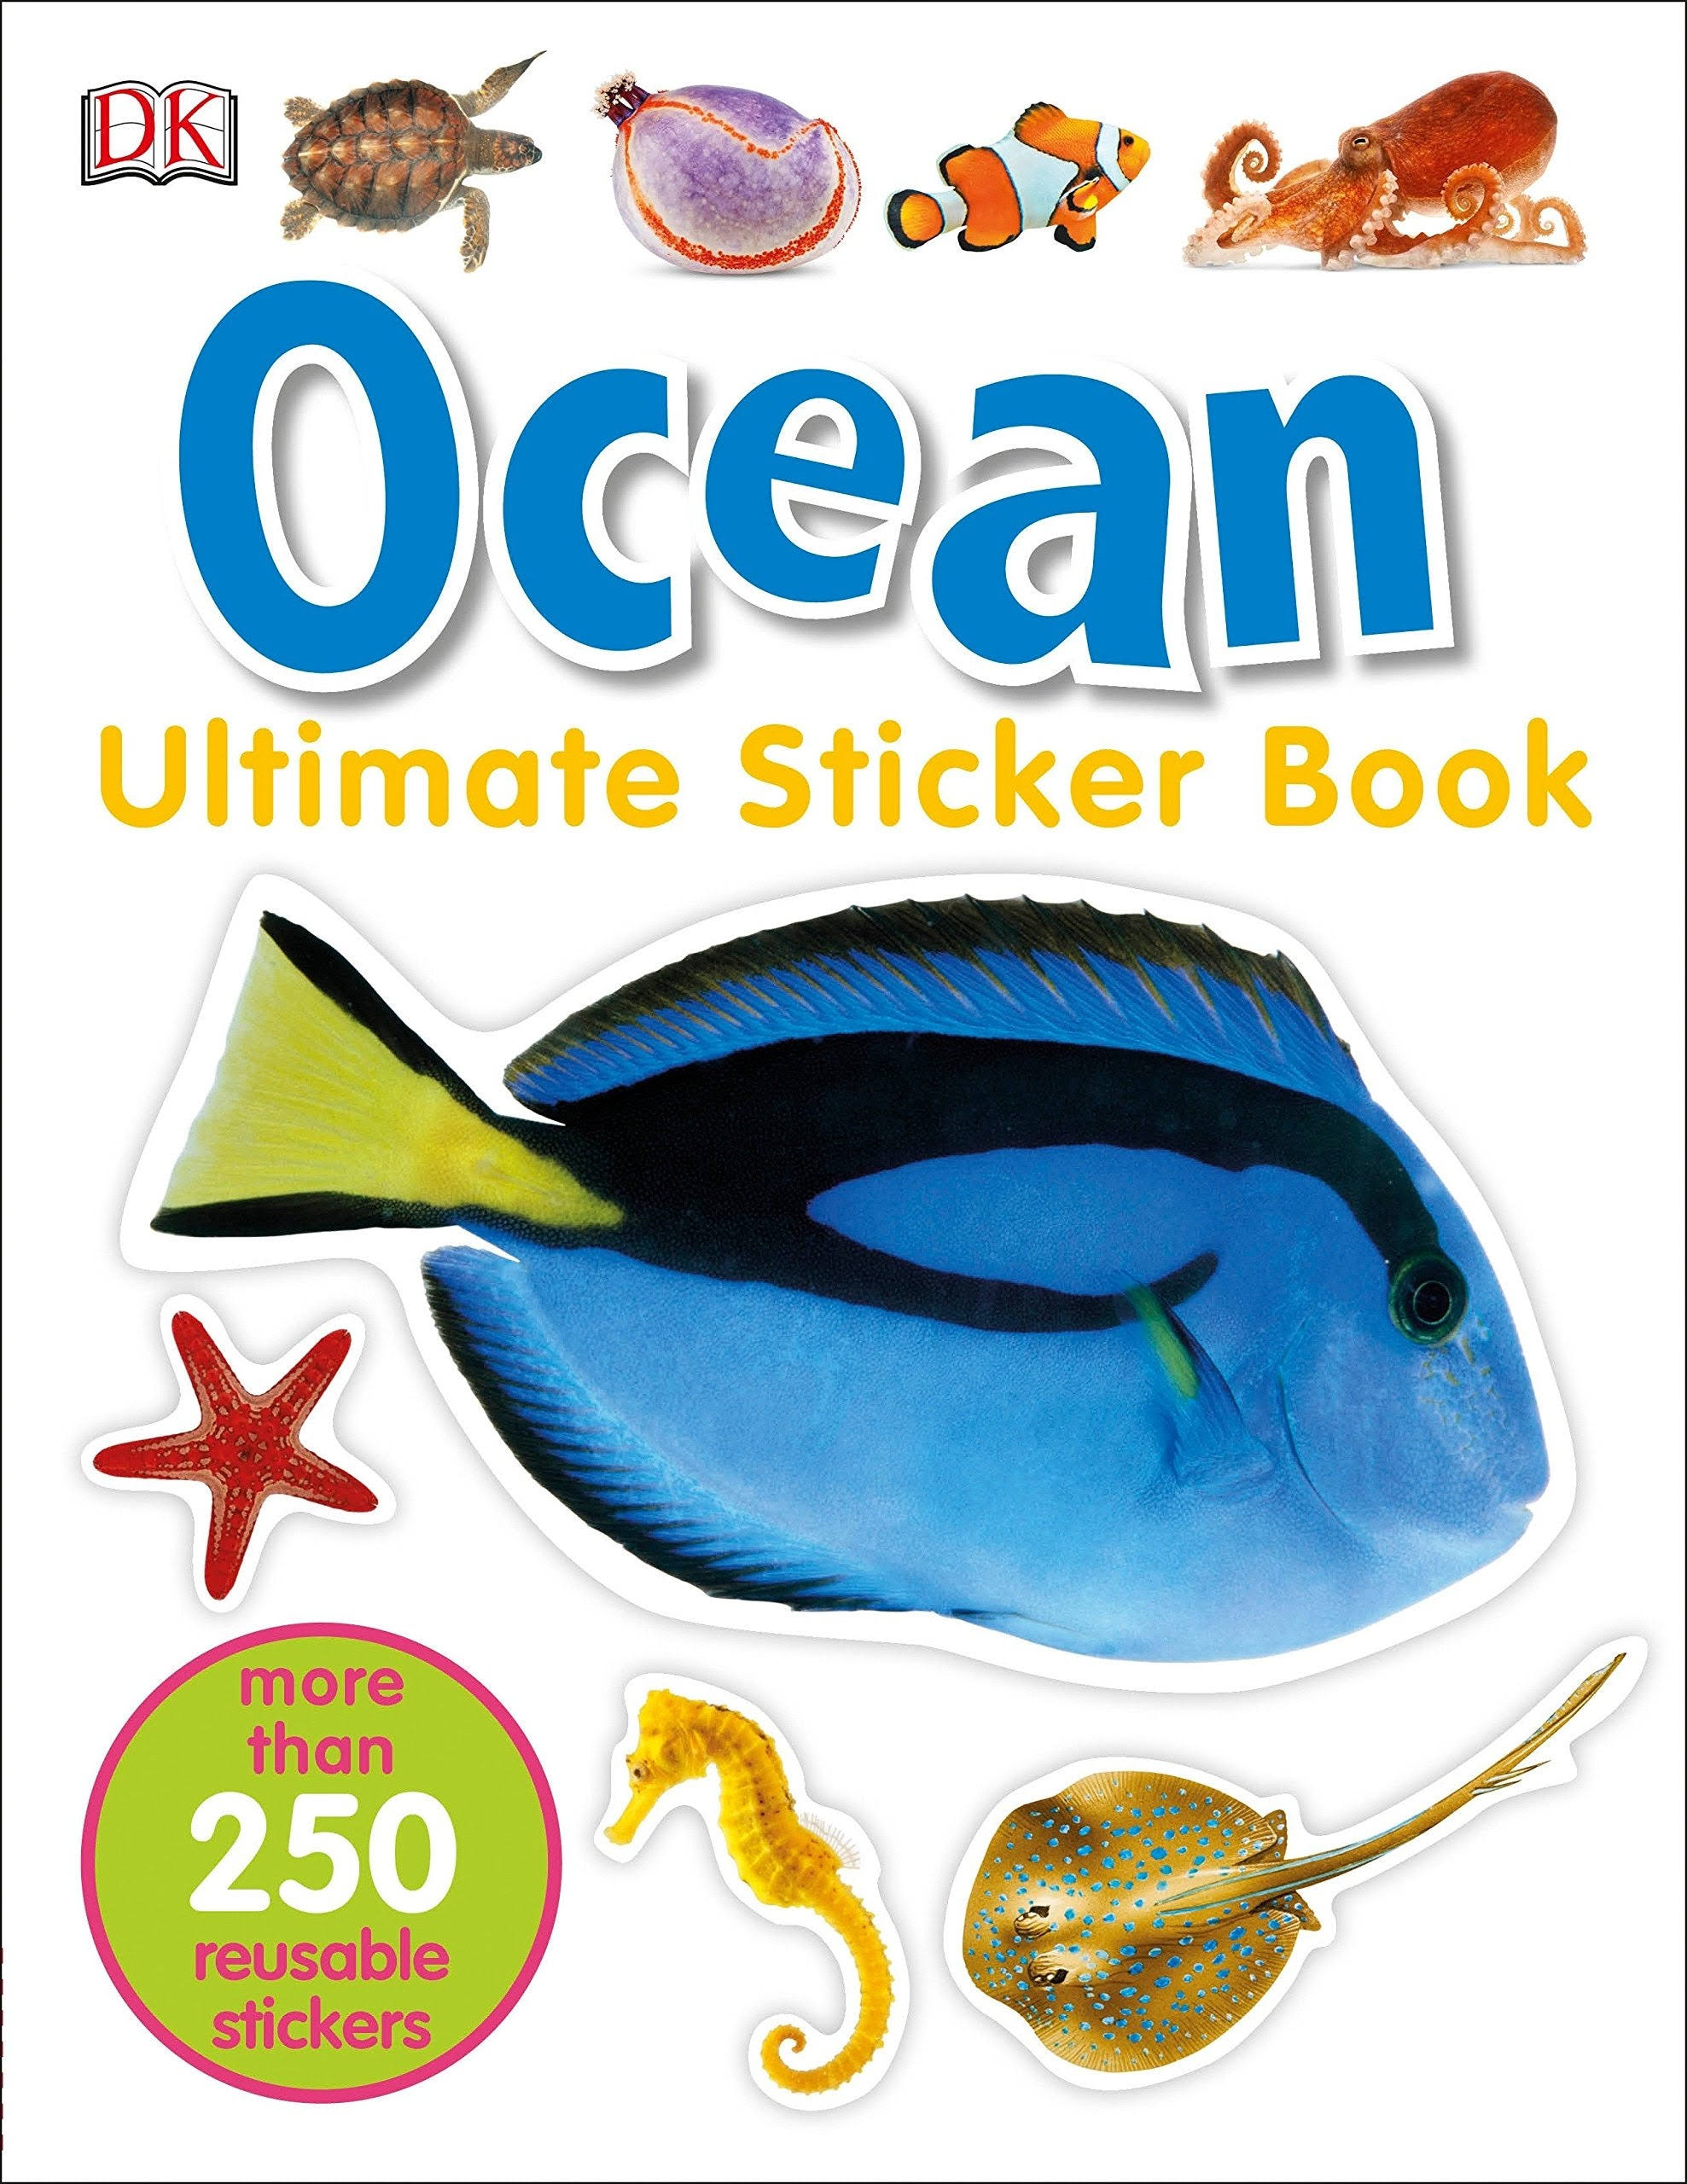 Ocean Ultimate Sticker Book